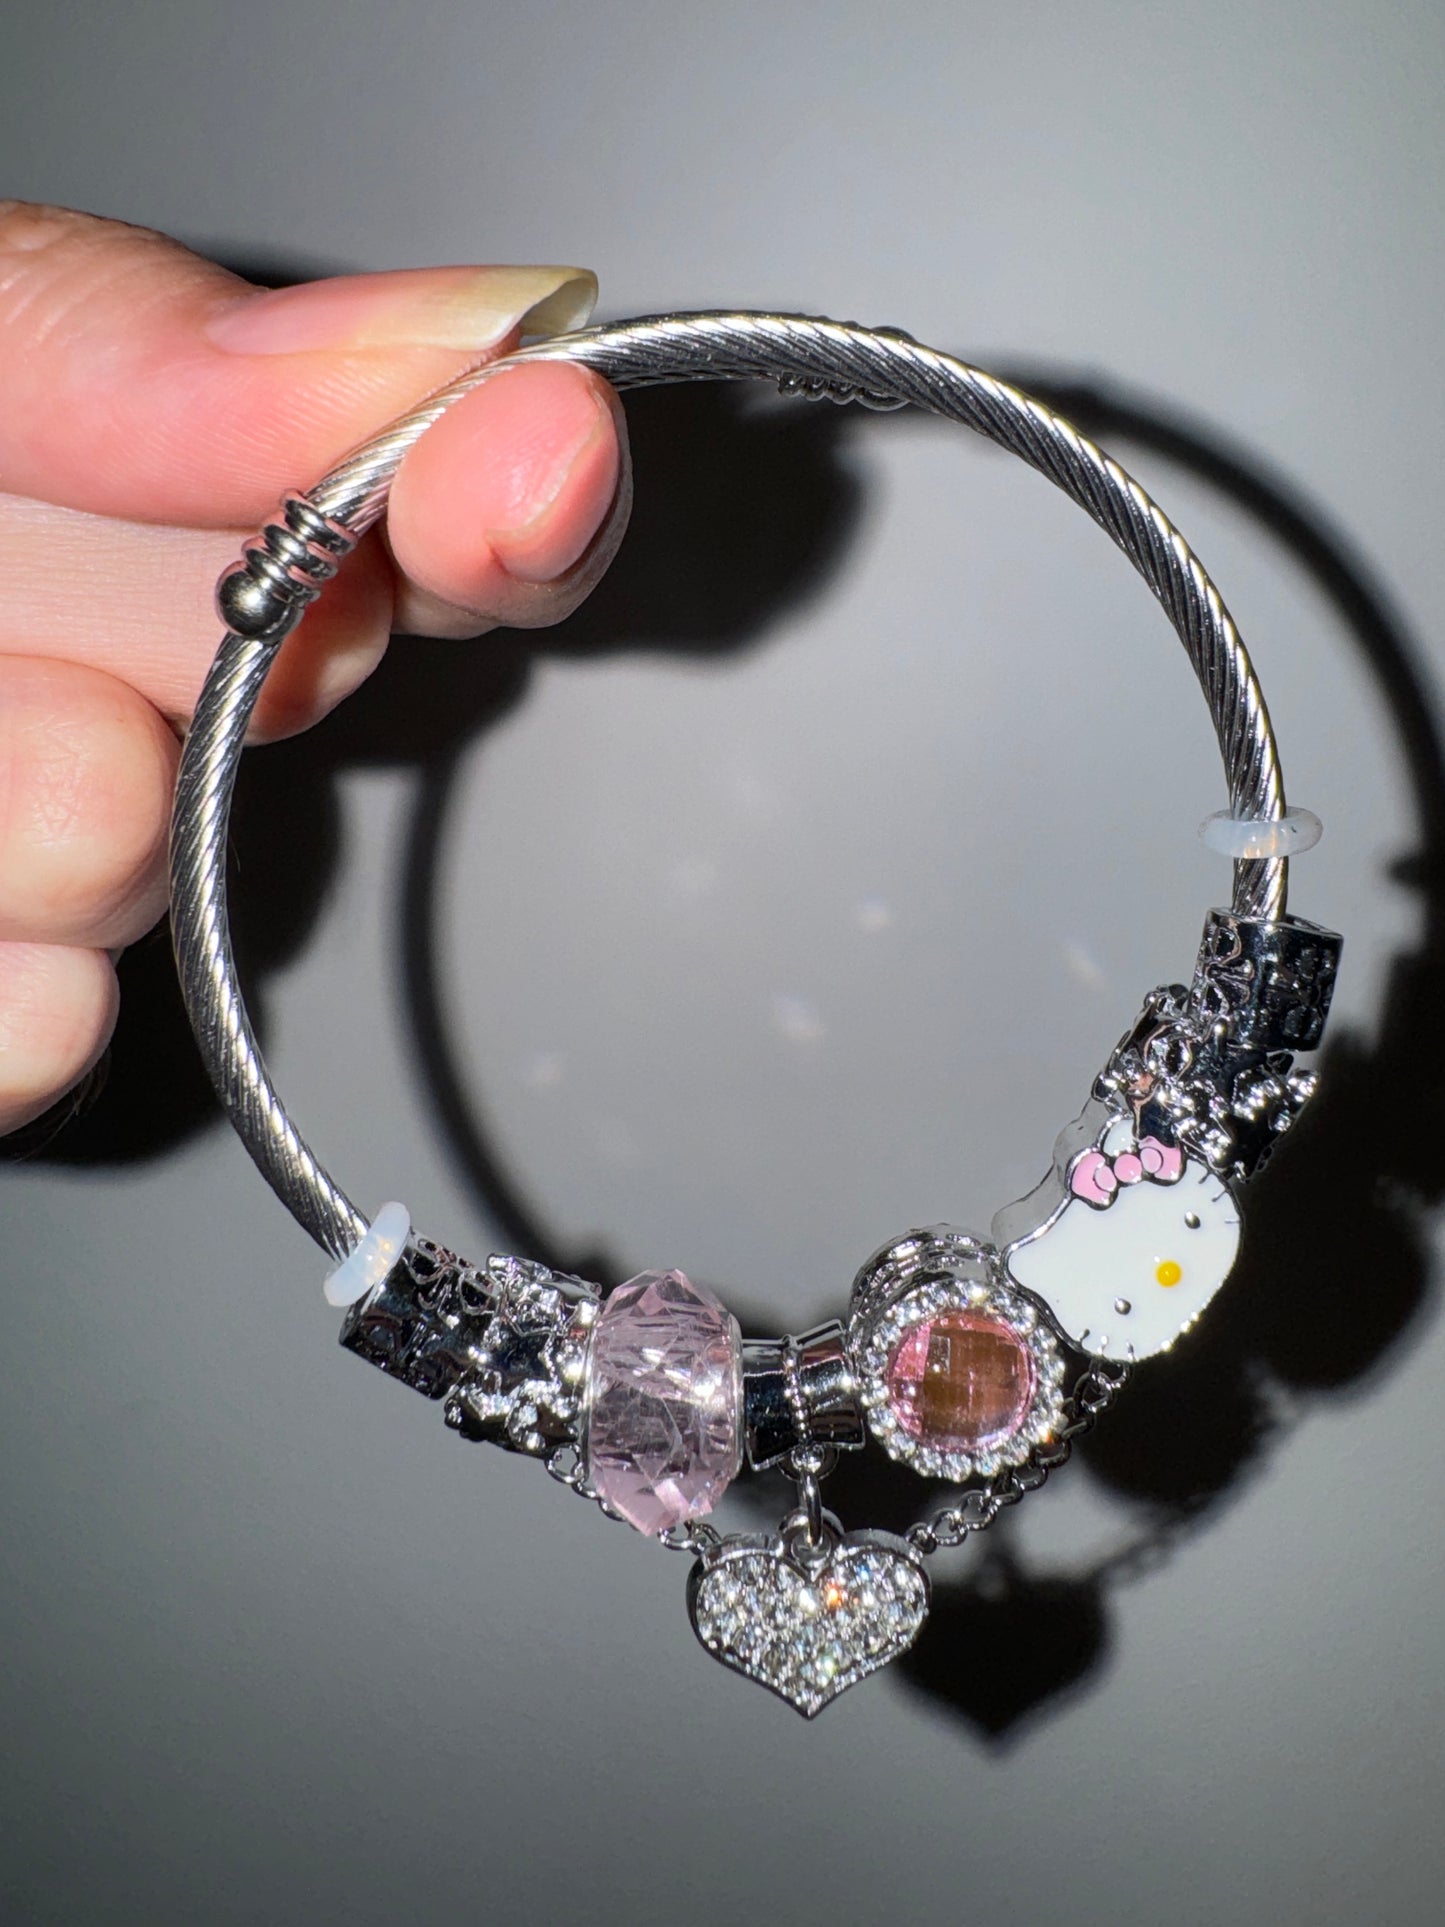 KT Pandora Charm Bracelets Stainless Steel Bangle Bracelet Birthday Christmas Jewelry Gift for Women Girls